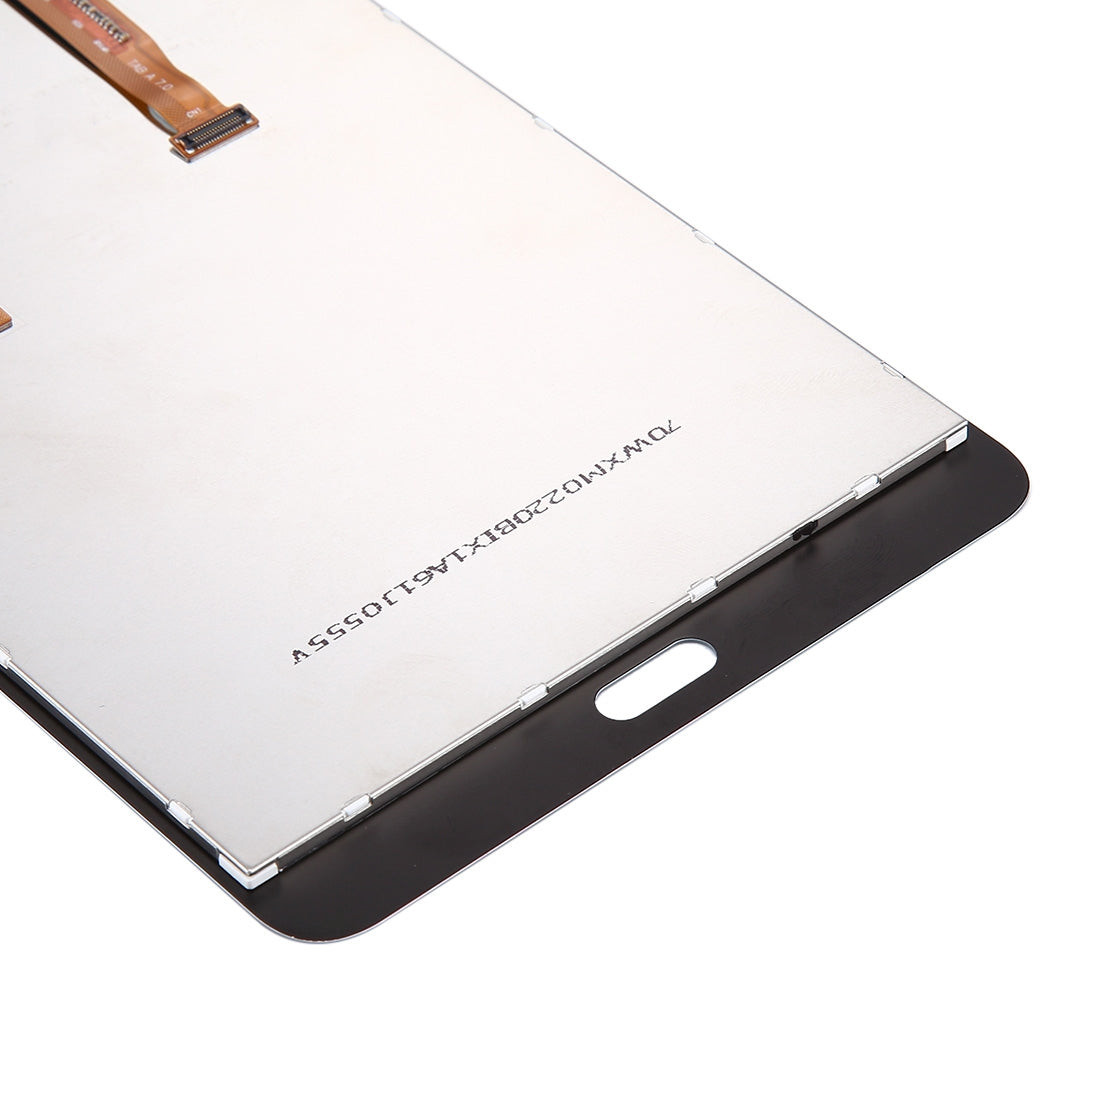 Ecran LCD + Tactile Samsung Galaxy Tab A 7.0 (2016) (Version 3G) T285 Blanc